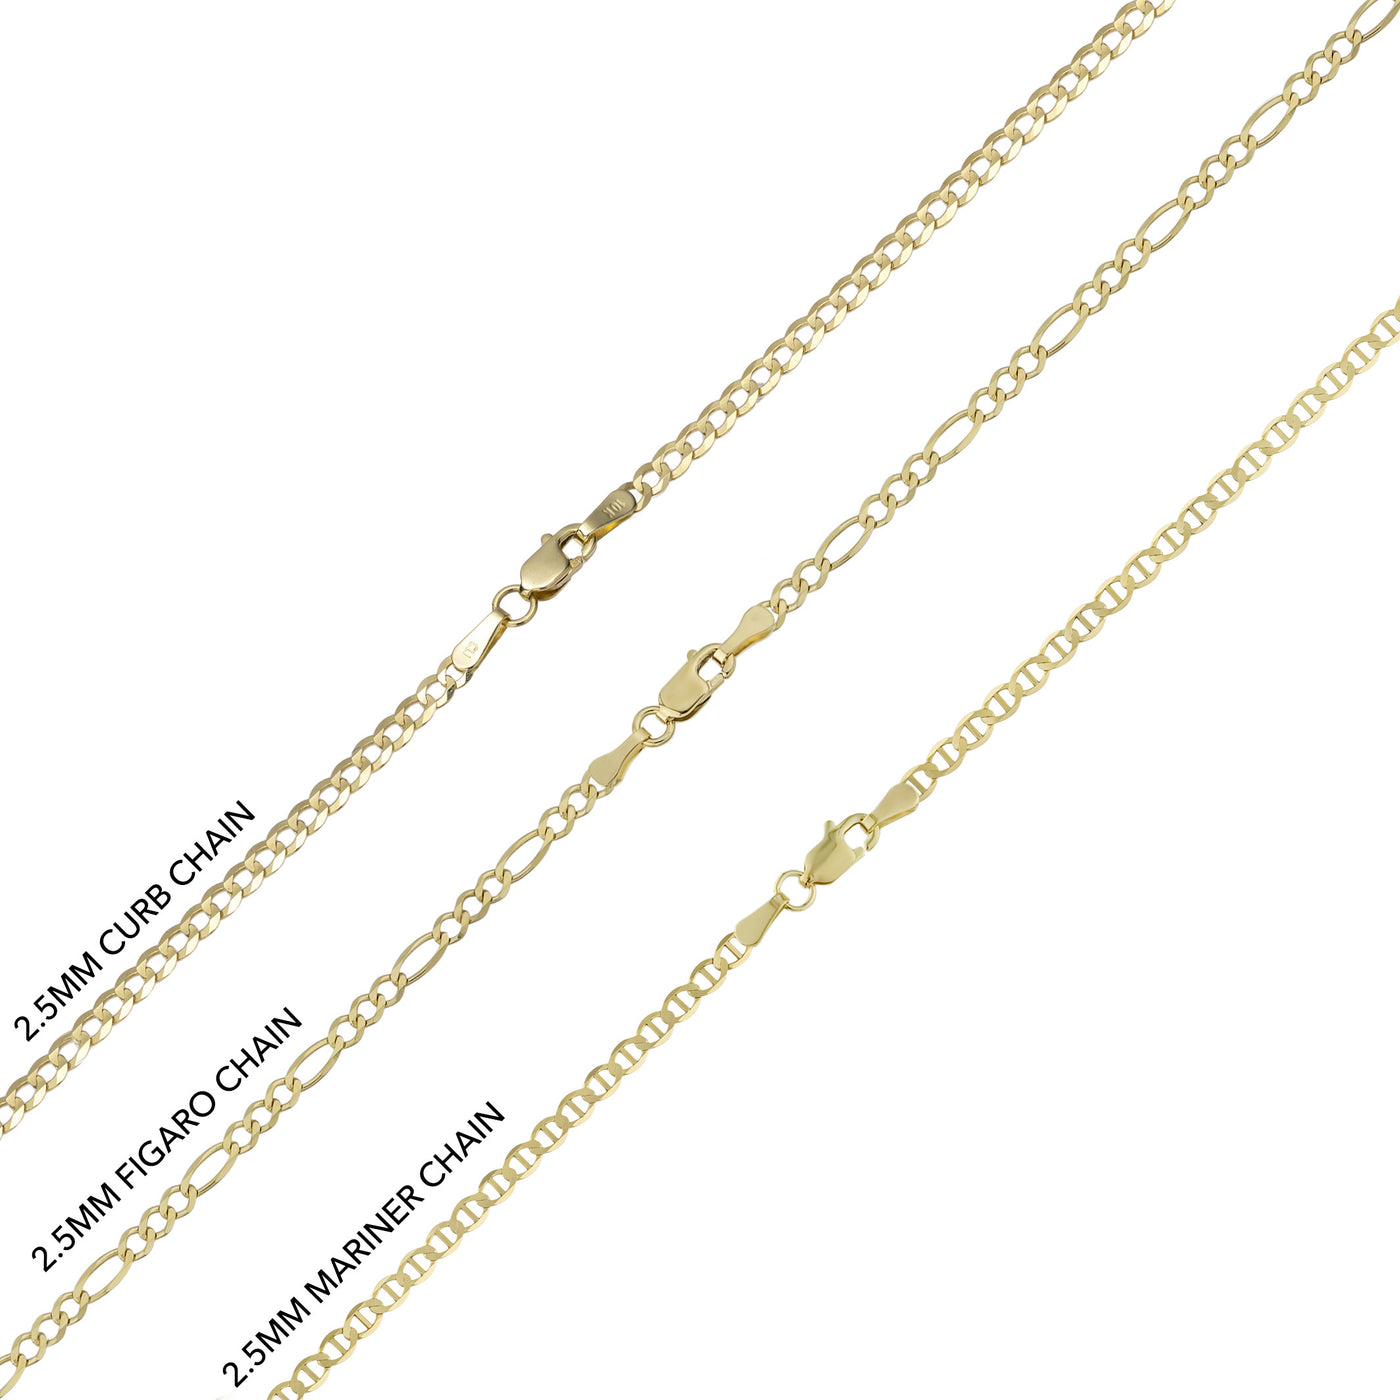 1 3/8" Lion Head Medallion Pendant & Chain Necklace Set 10K Yellow Gold